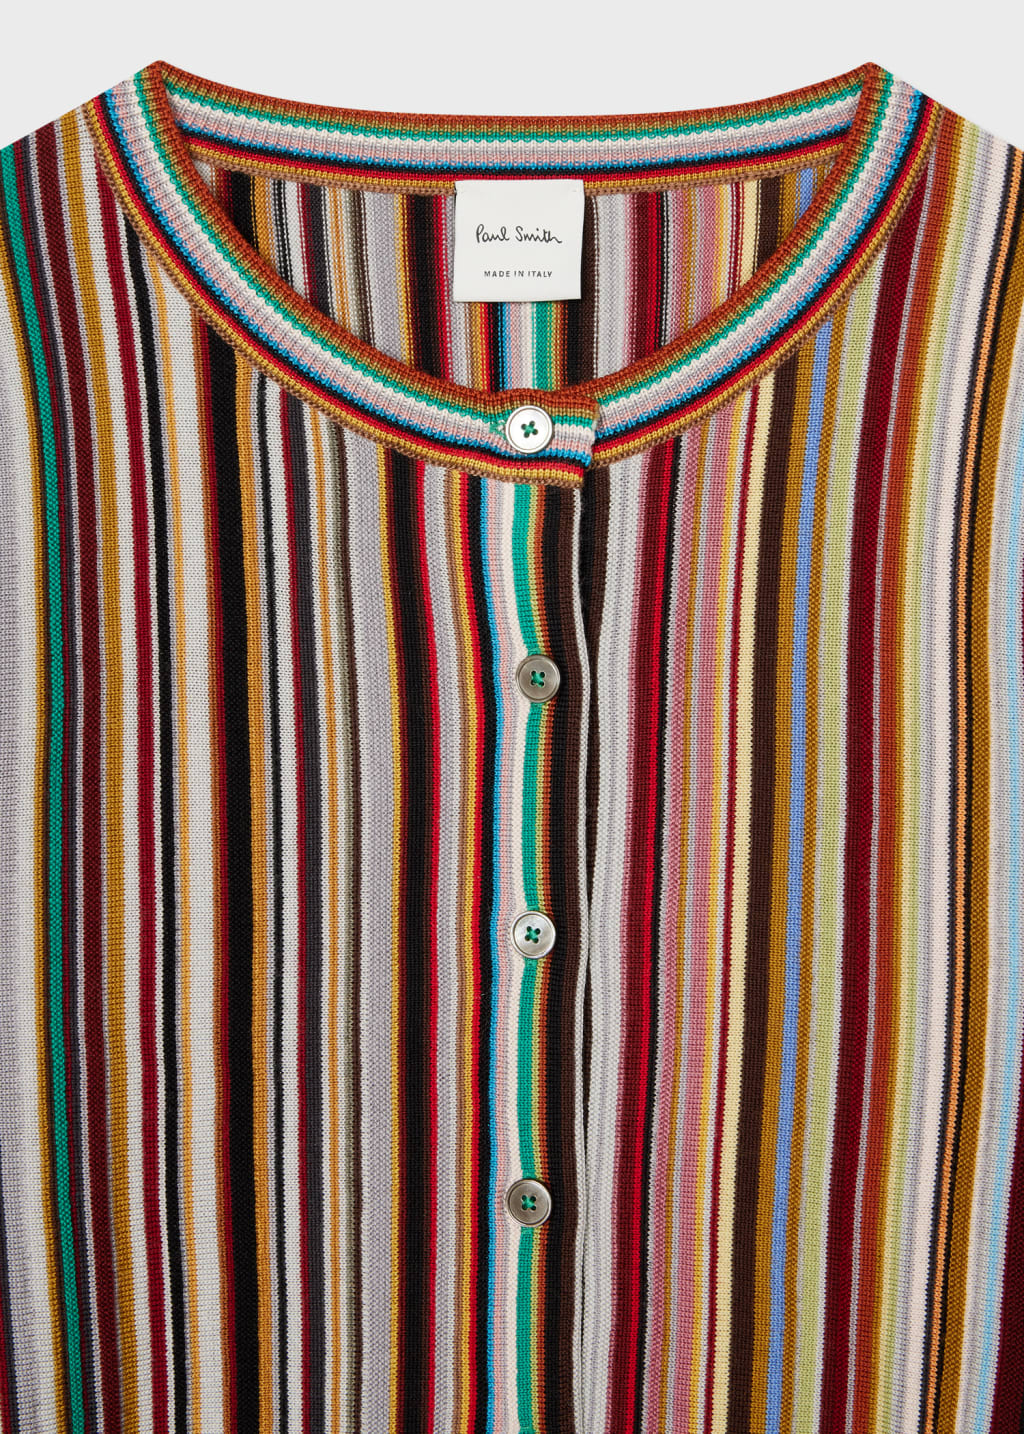 Detail View - Women's 'Signature Stripe' Cardigan Paul Smith